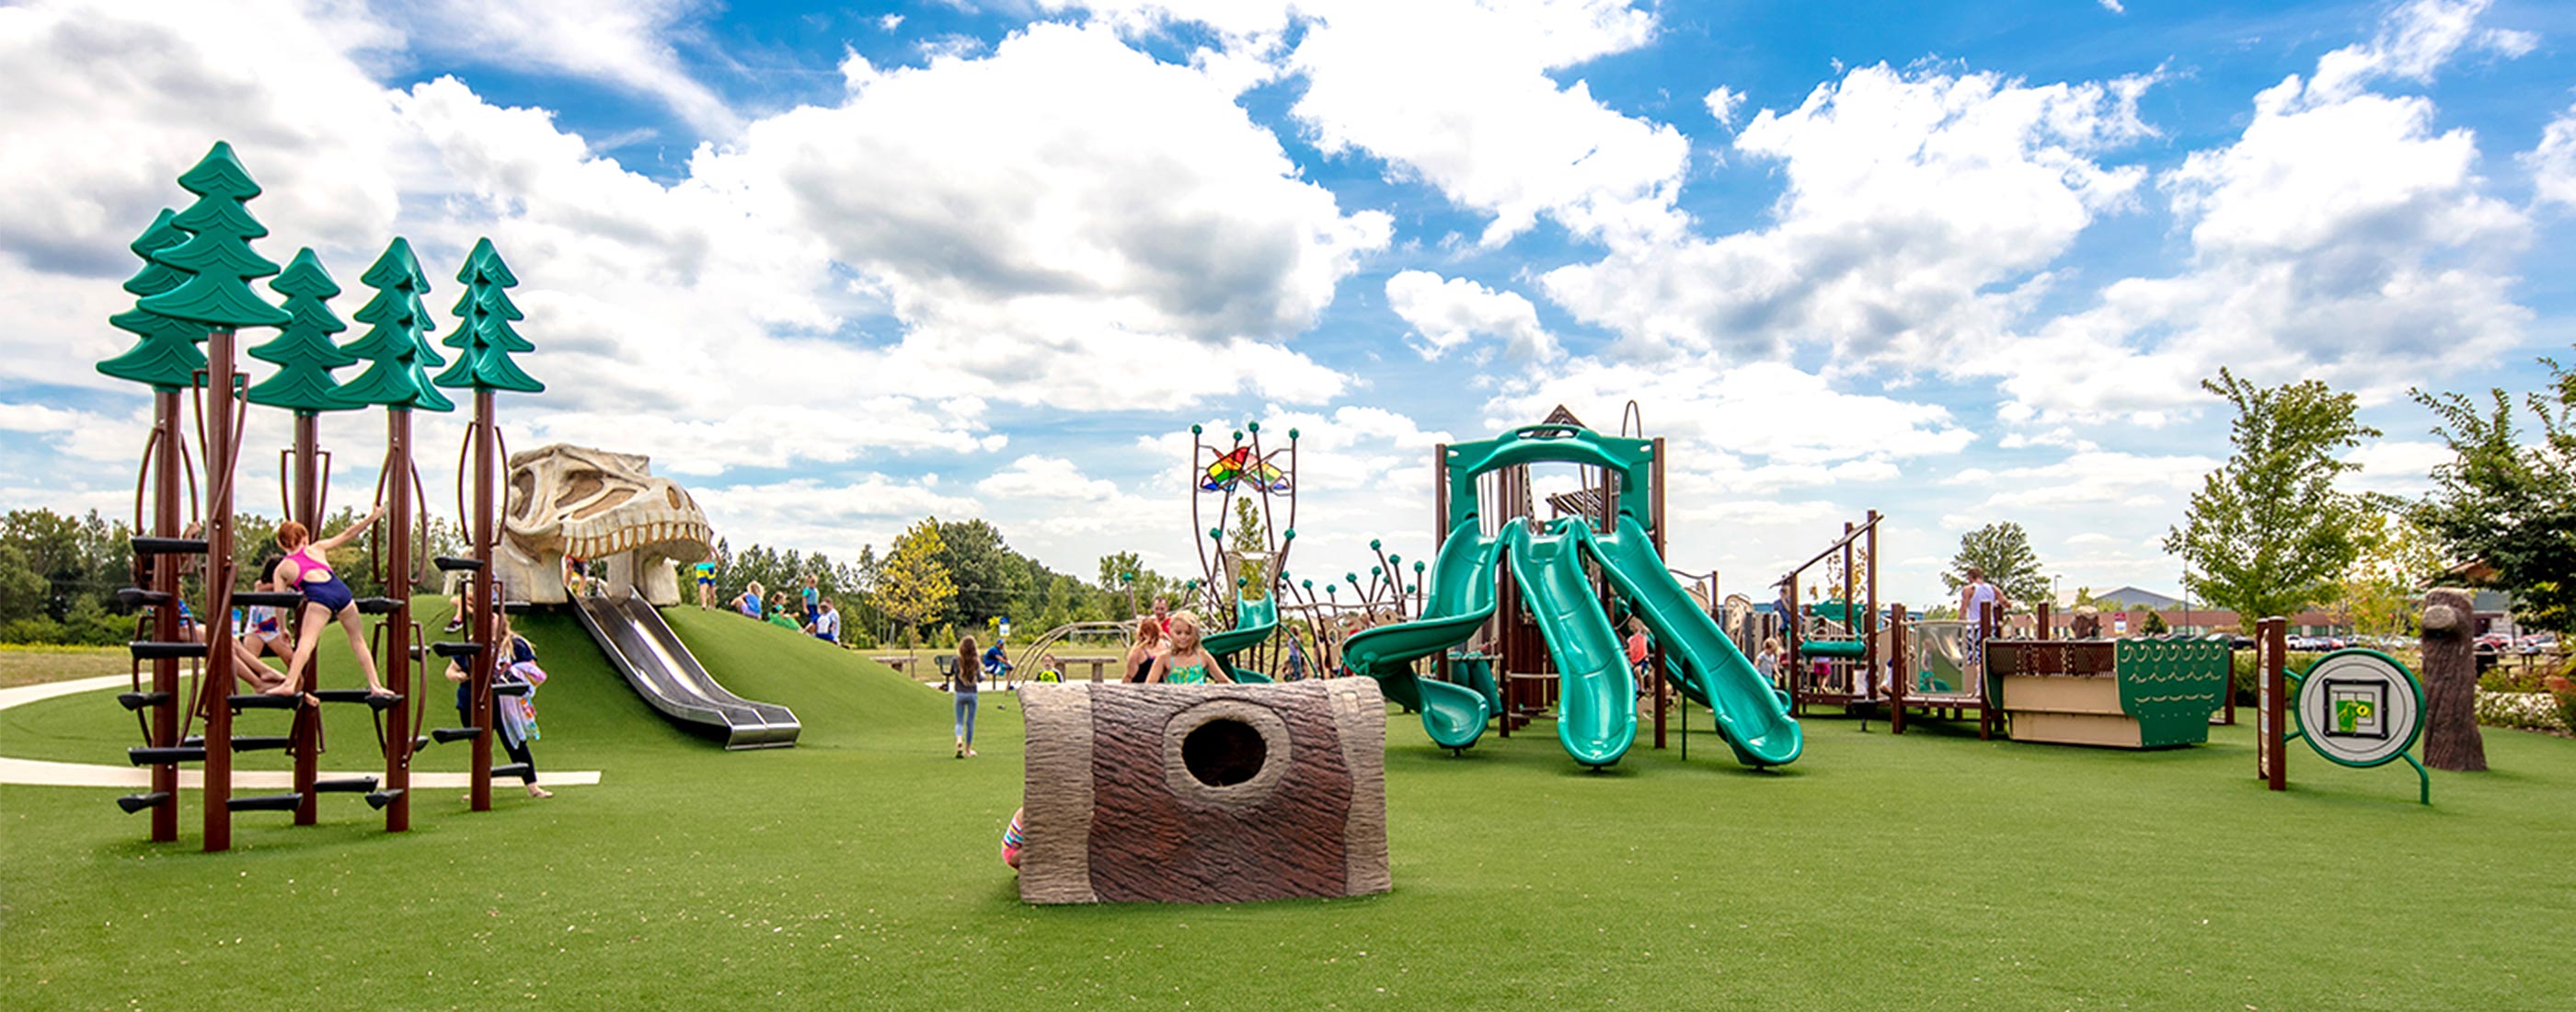 Children play at the Veterans Memorial Park in Delaware, Ohio.